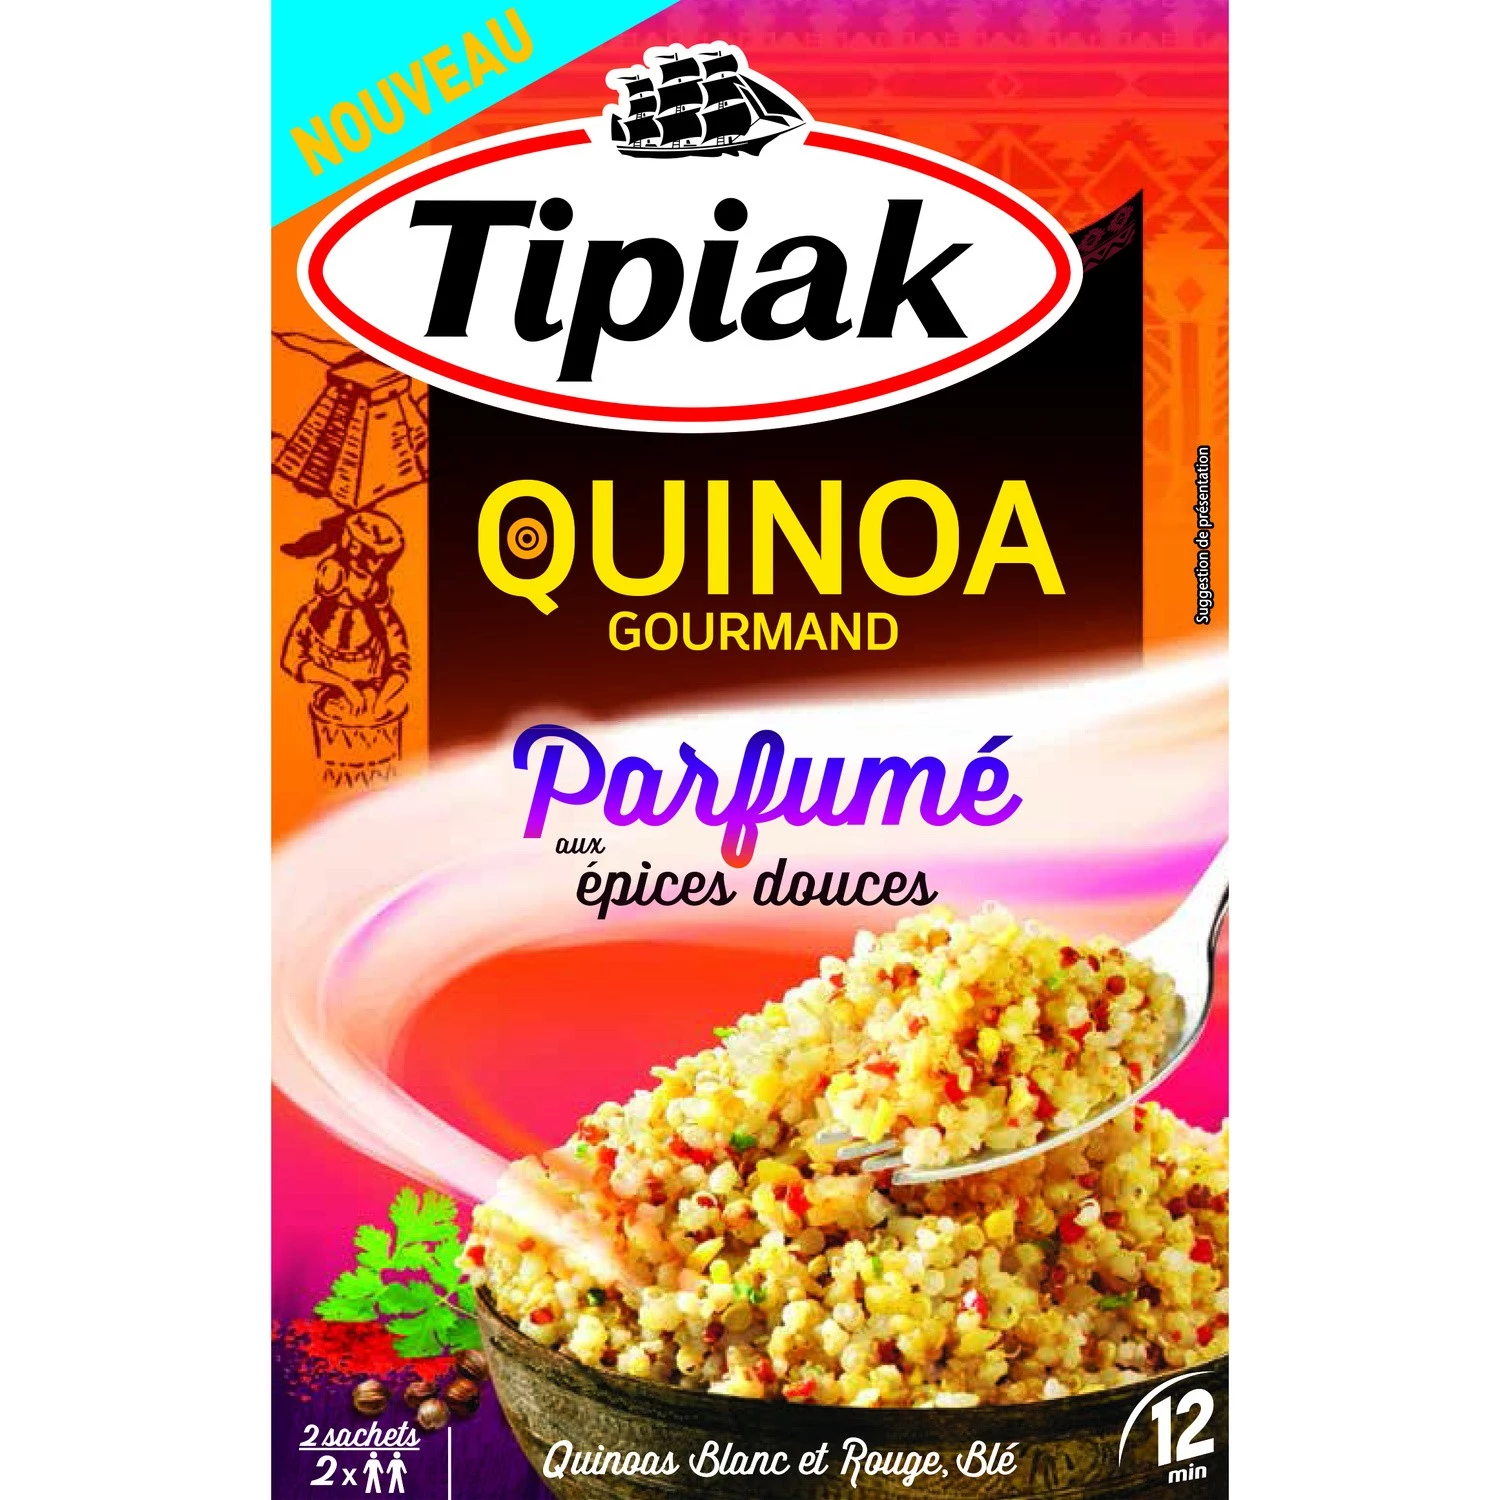 Quinoa hảo hạng tẩm gia vị ngọt, 2x120g - TIPIAK